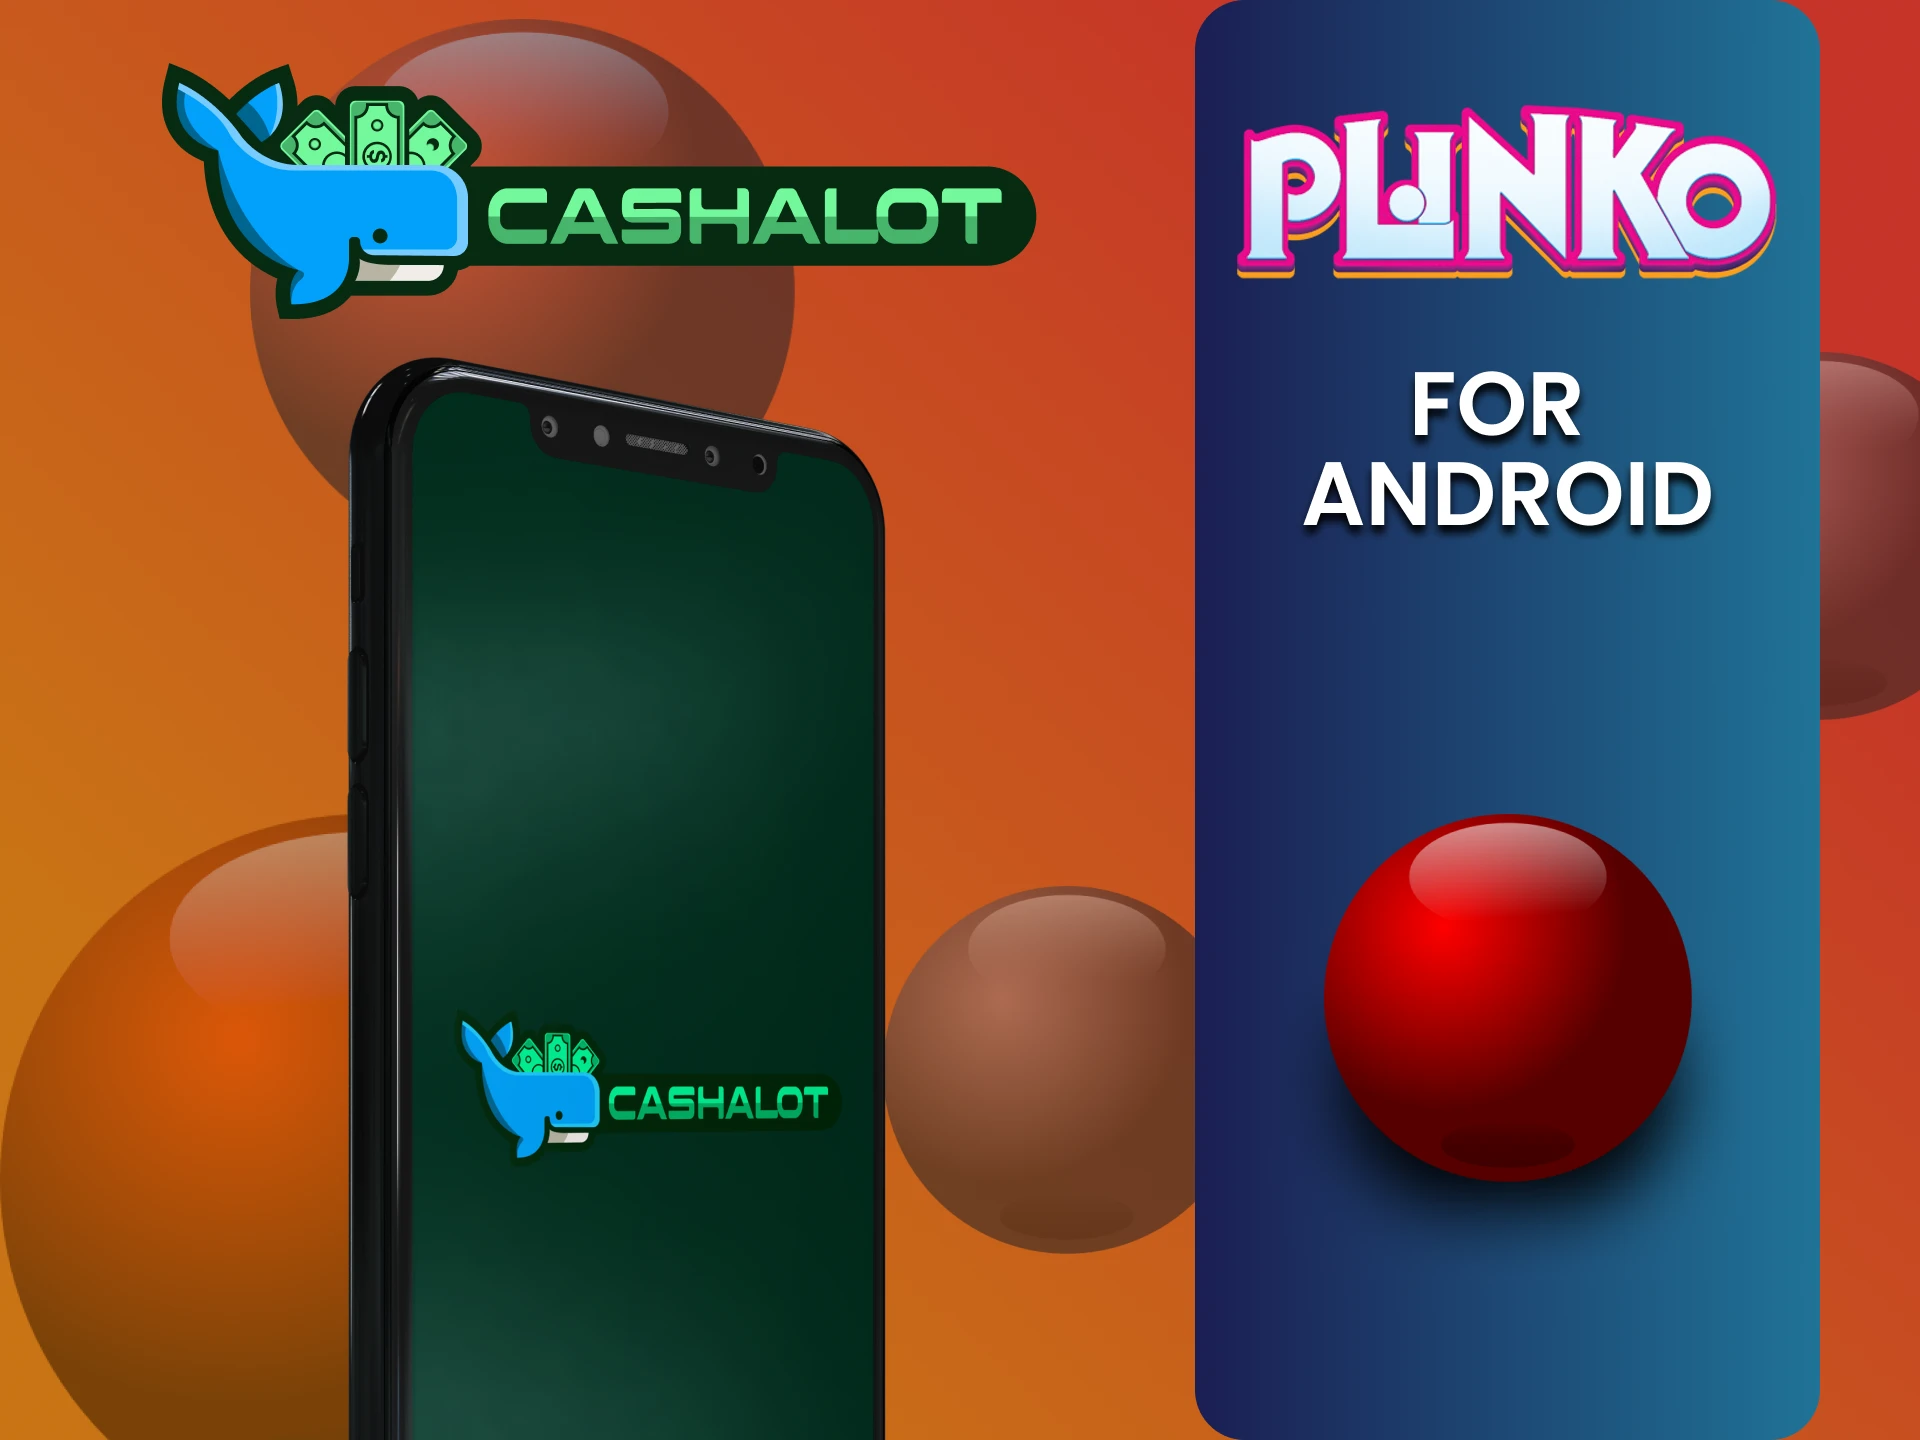 Install the Batery app on Cashalot to play Plinko.